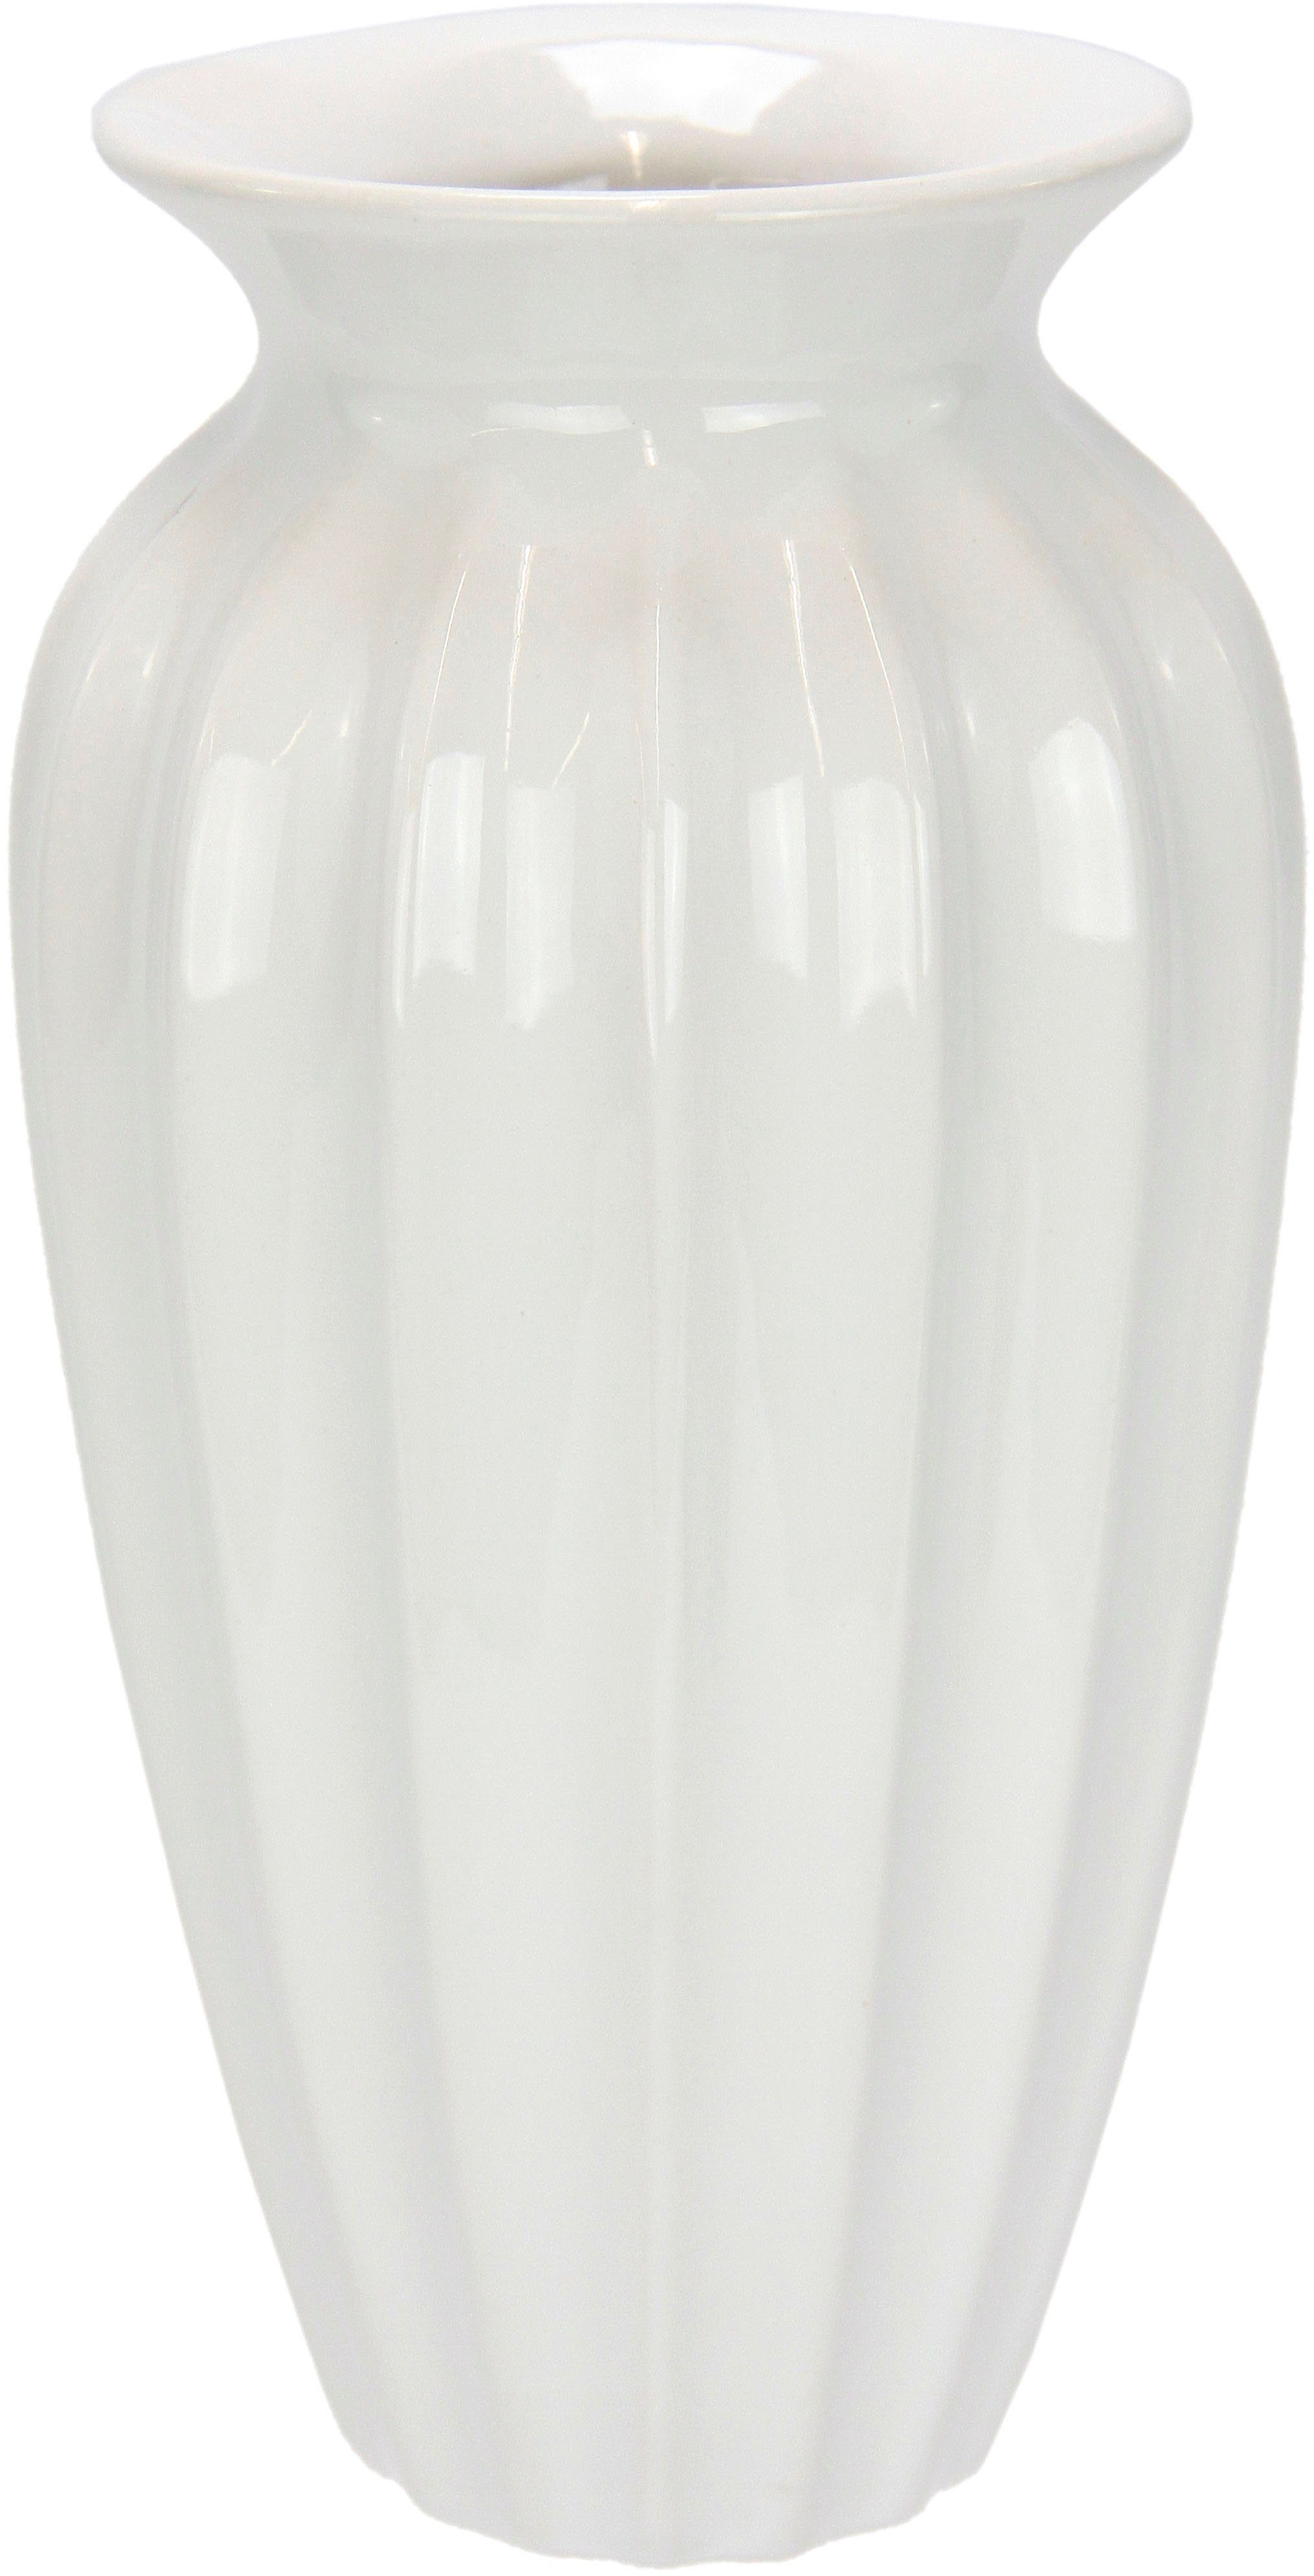 Aus Keramik, Dekovase groß Vase, rund Keramik I.GE.A.